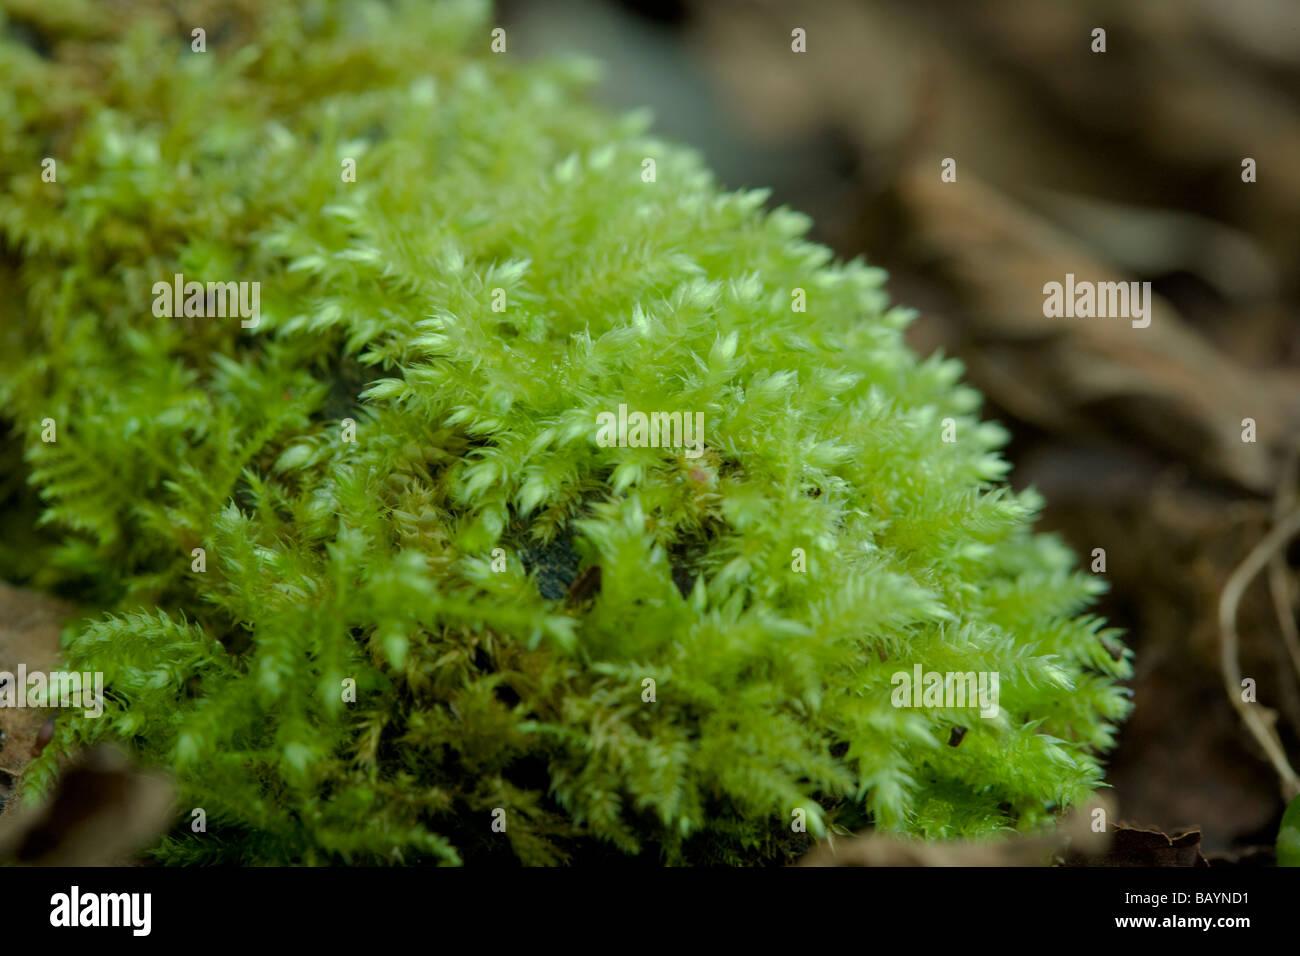 rough-stalked-feather-moss-brachythecium-rutabulum-growing-on-wood-BAYND1.jpg